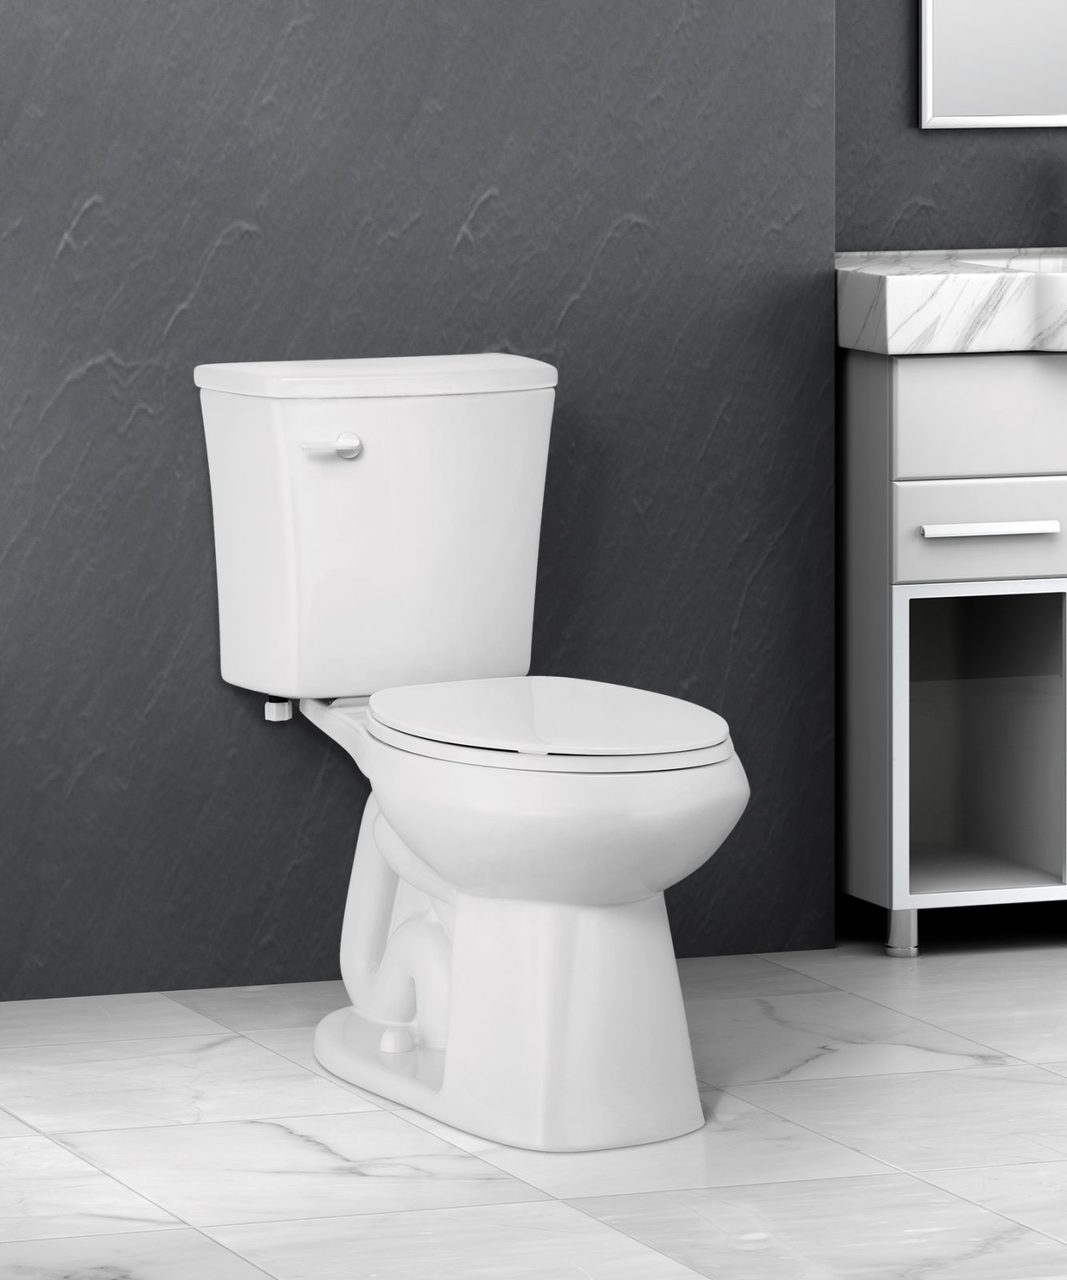 Toilet seat, Plumbing fixture, Interior design, White, Black, Cabinetry, Rectangle, Wood, Purple